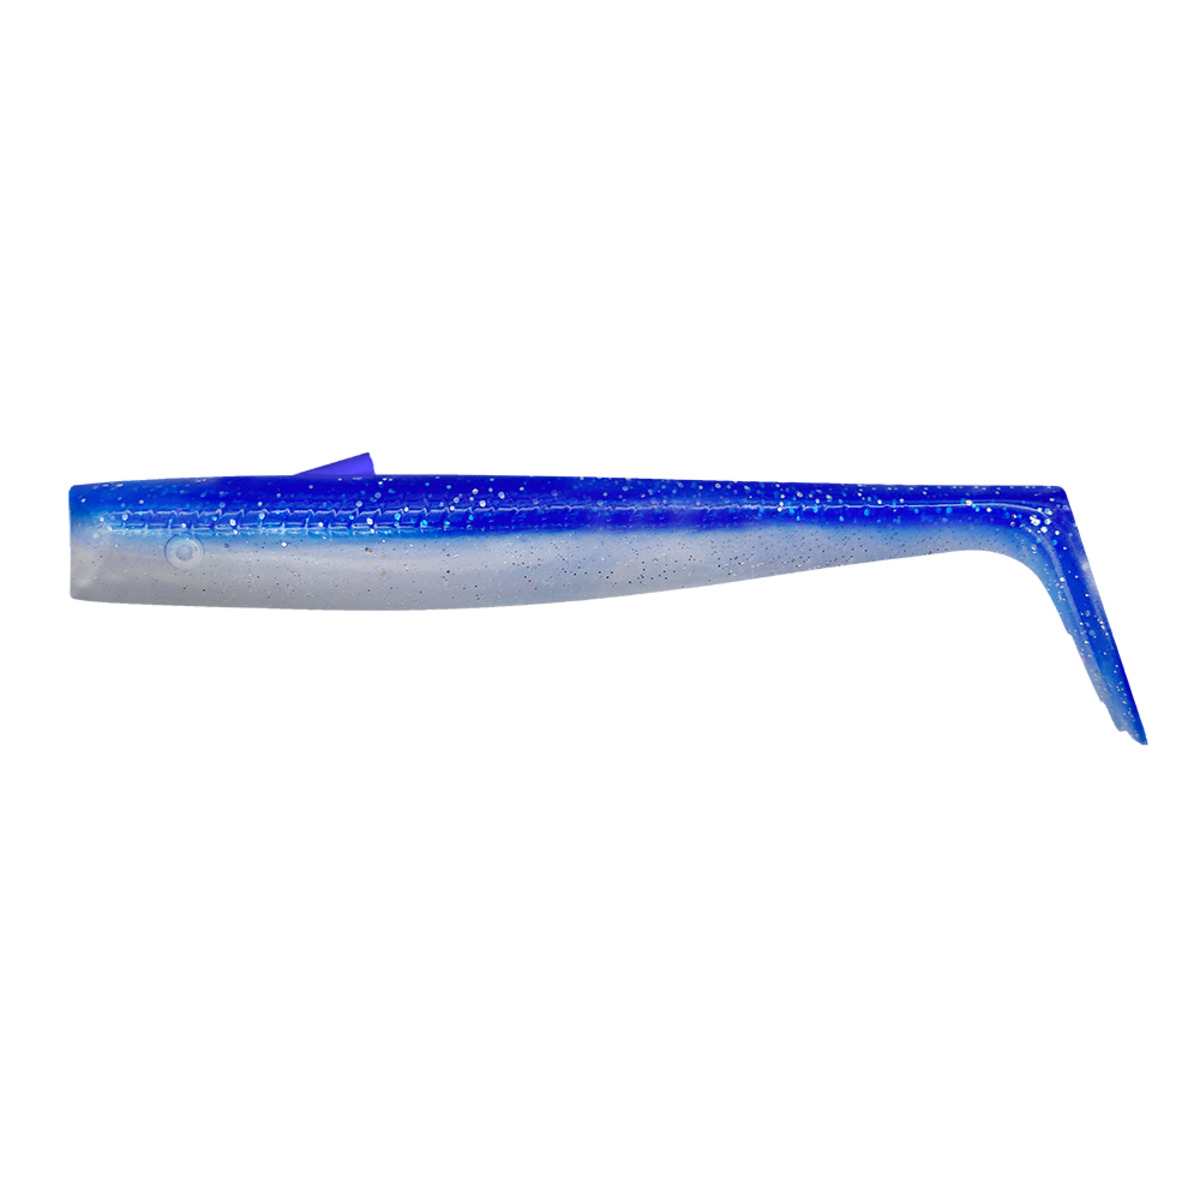 Savage Gear Sandeel V2 Wl Tail95 9.5cm 7g - BLUE PEARL SILVER